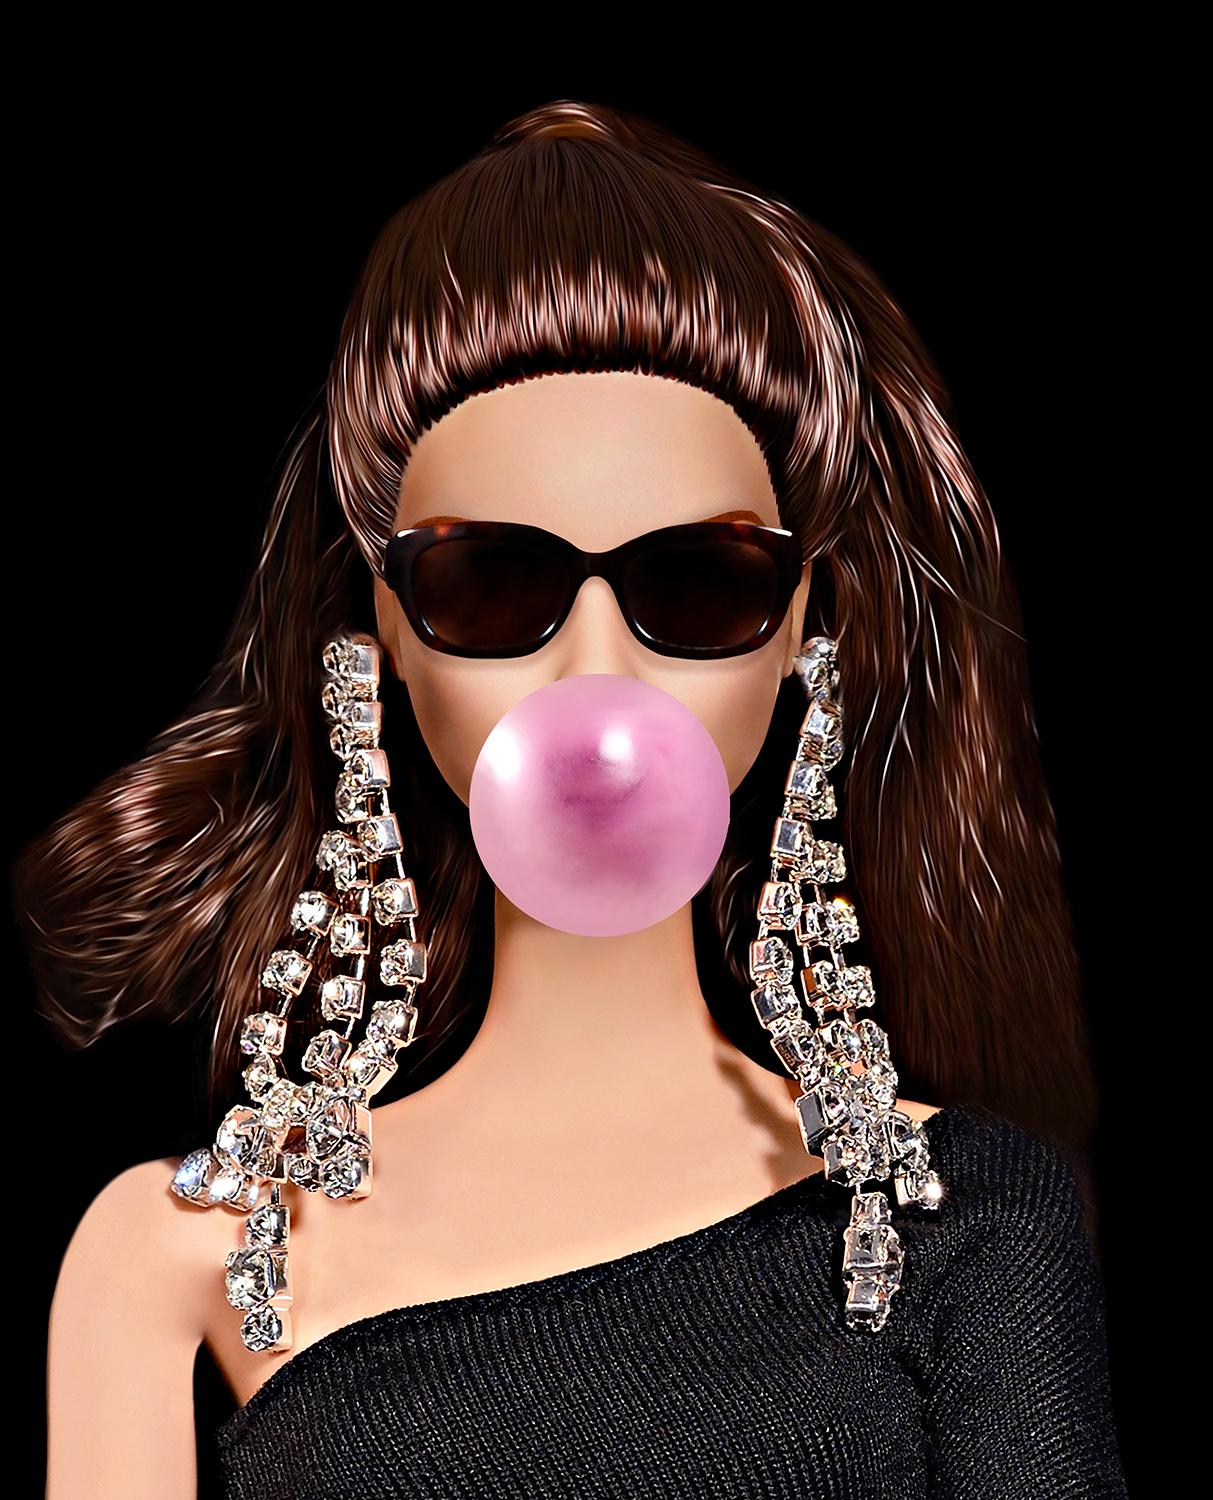 ""Kim in Gucci", Fotografie von Ccile Plaisance (28x22 Zoll), 2020